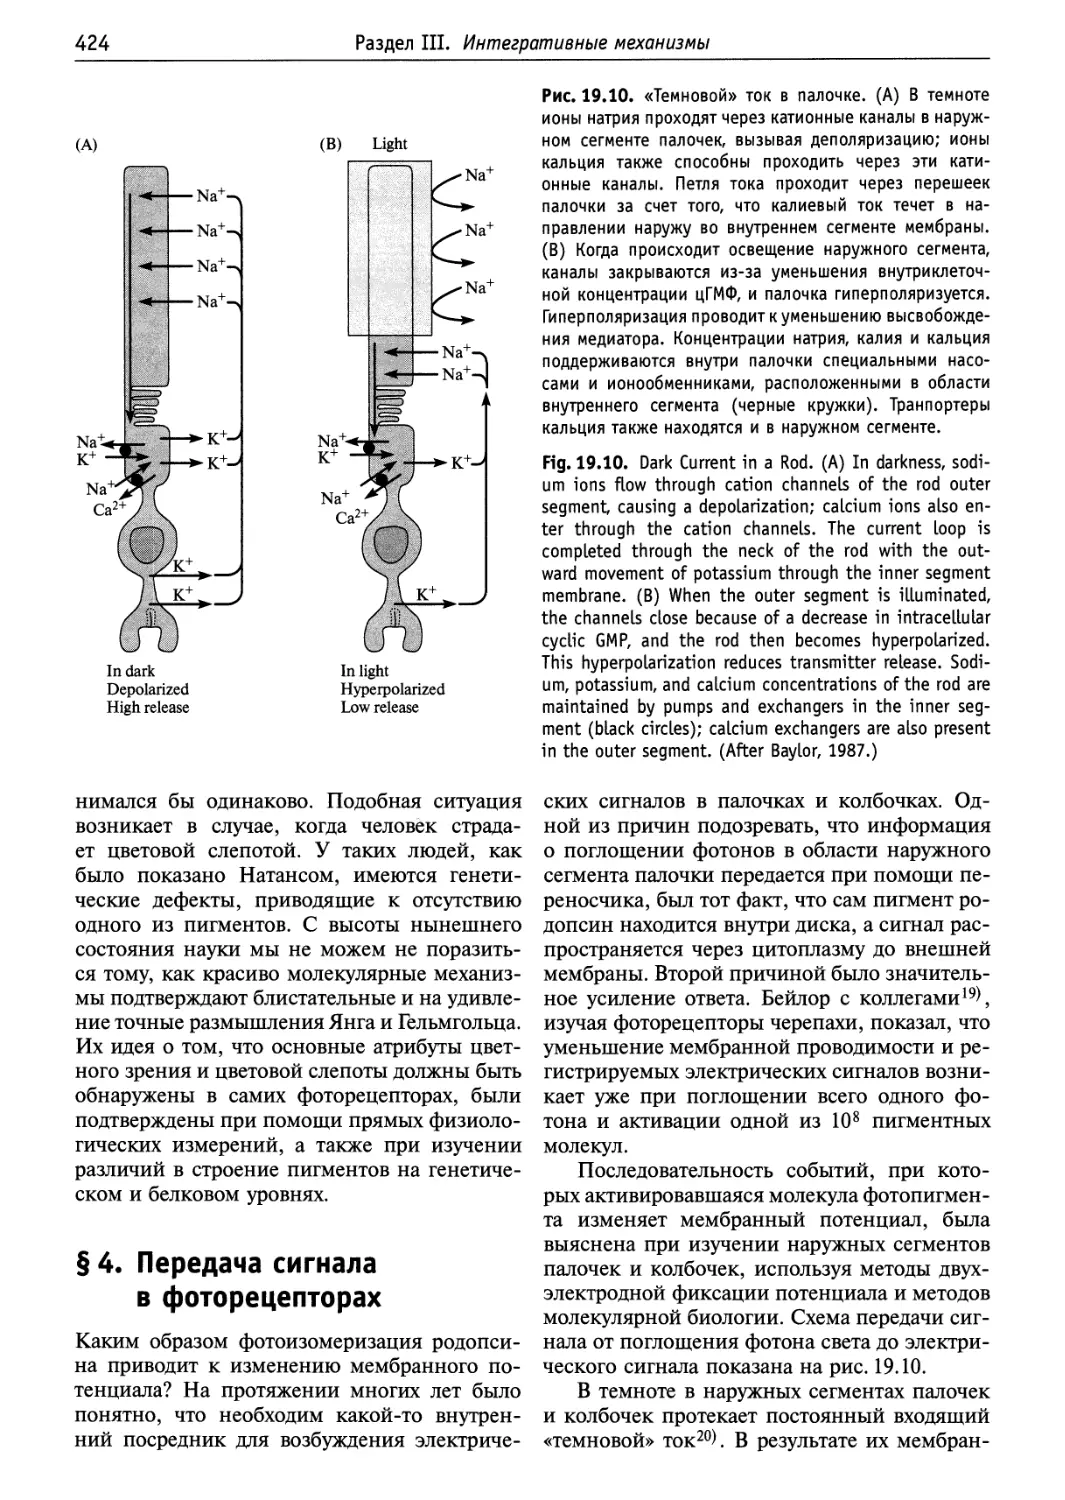 §4. Передача сигнала в фоторецепторах